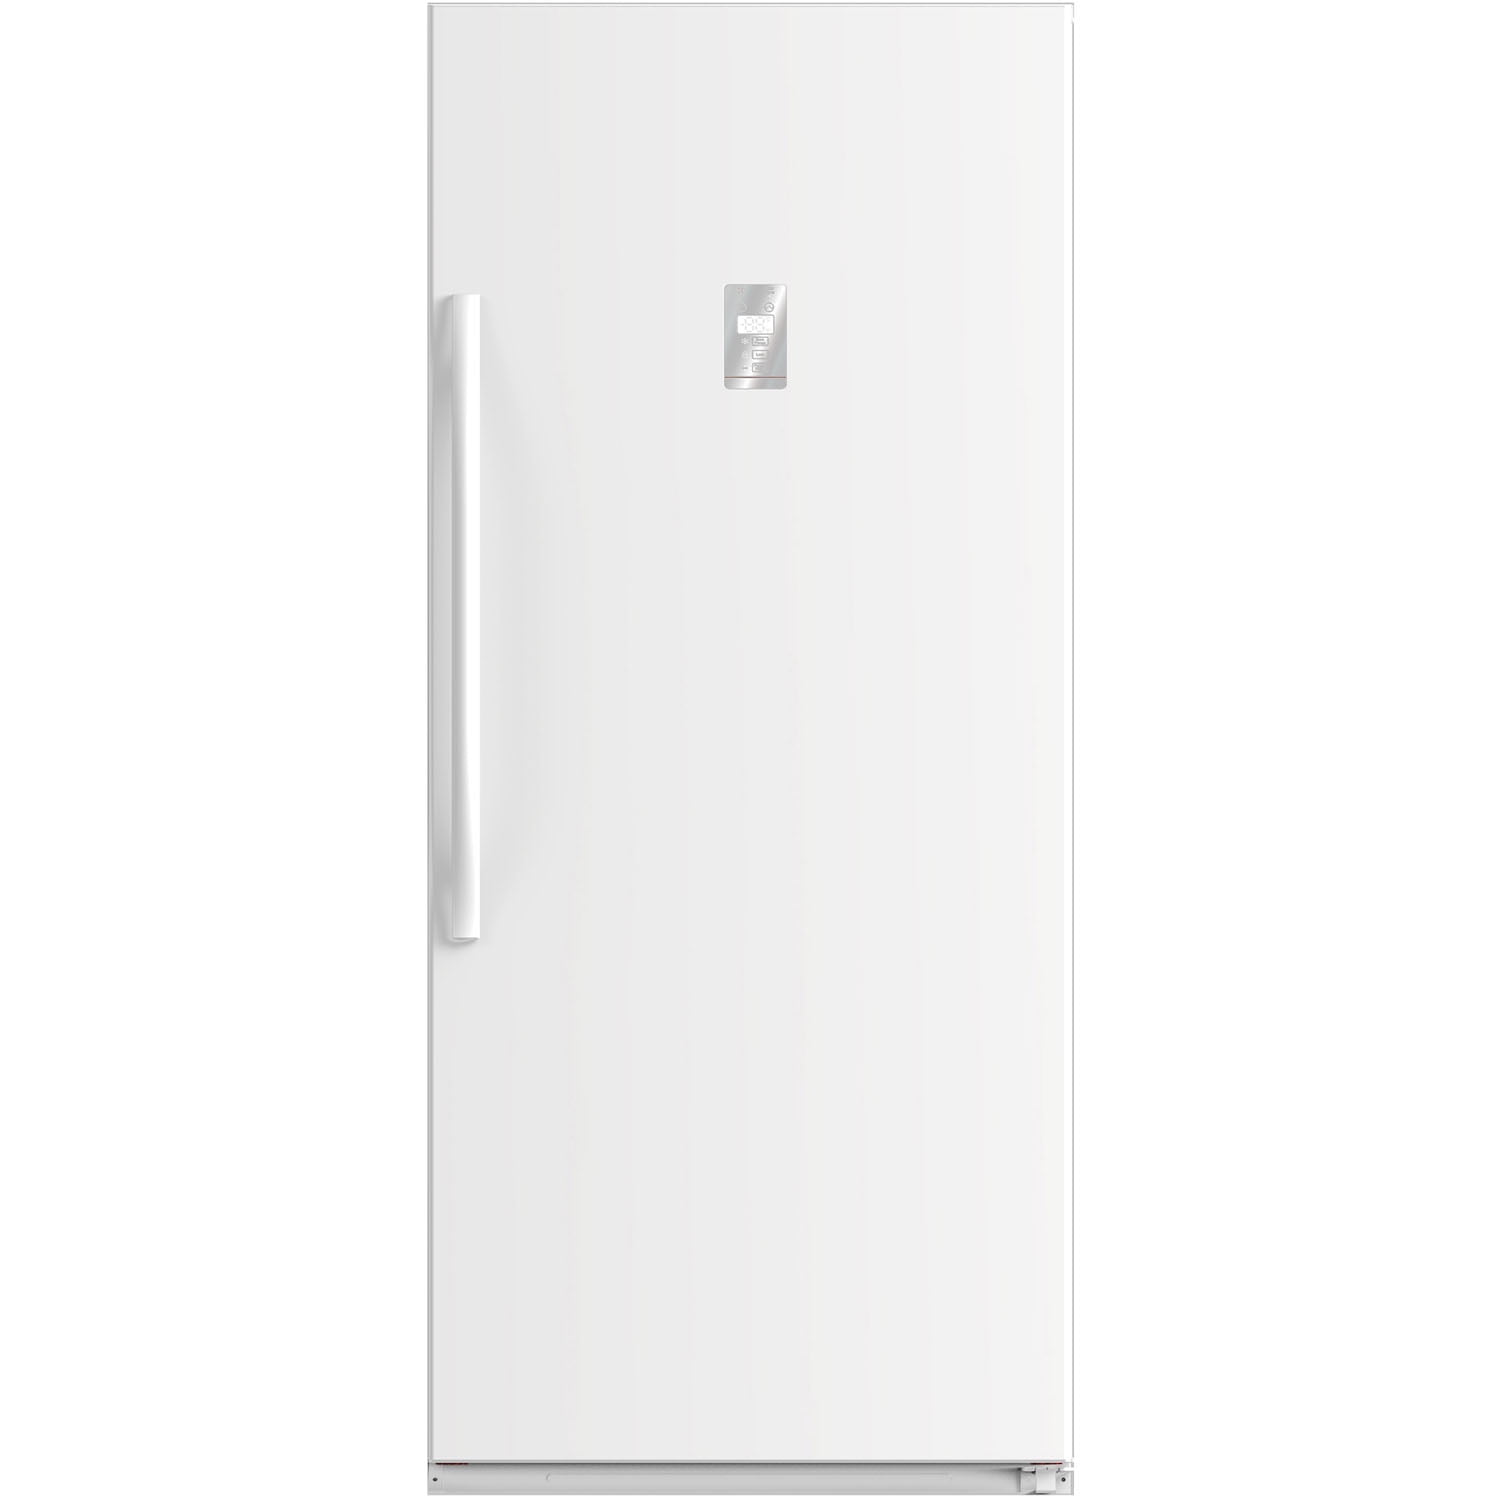 Midea 21 Cu Ft Convertible Upright Freezer In White